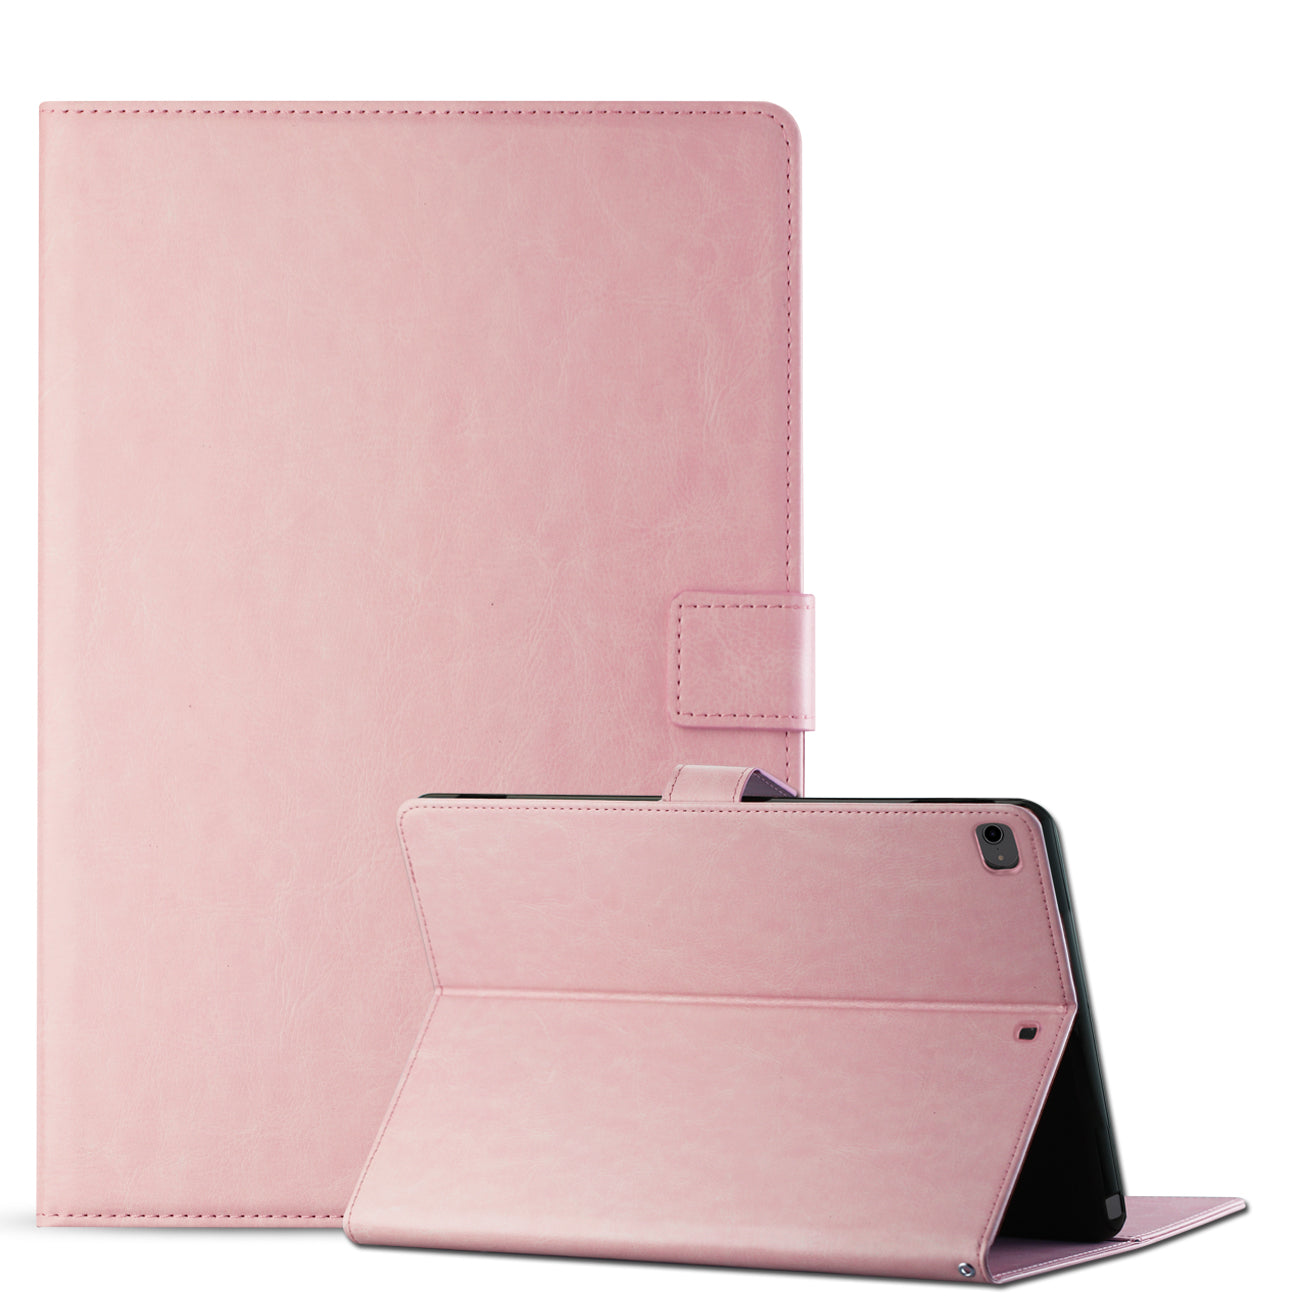 Reiko Leather Folio Cover Protective Case for 8" iPad mini 4/5/6 In Pink